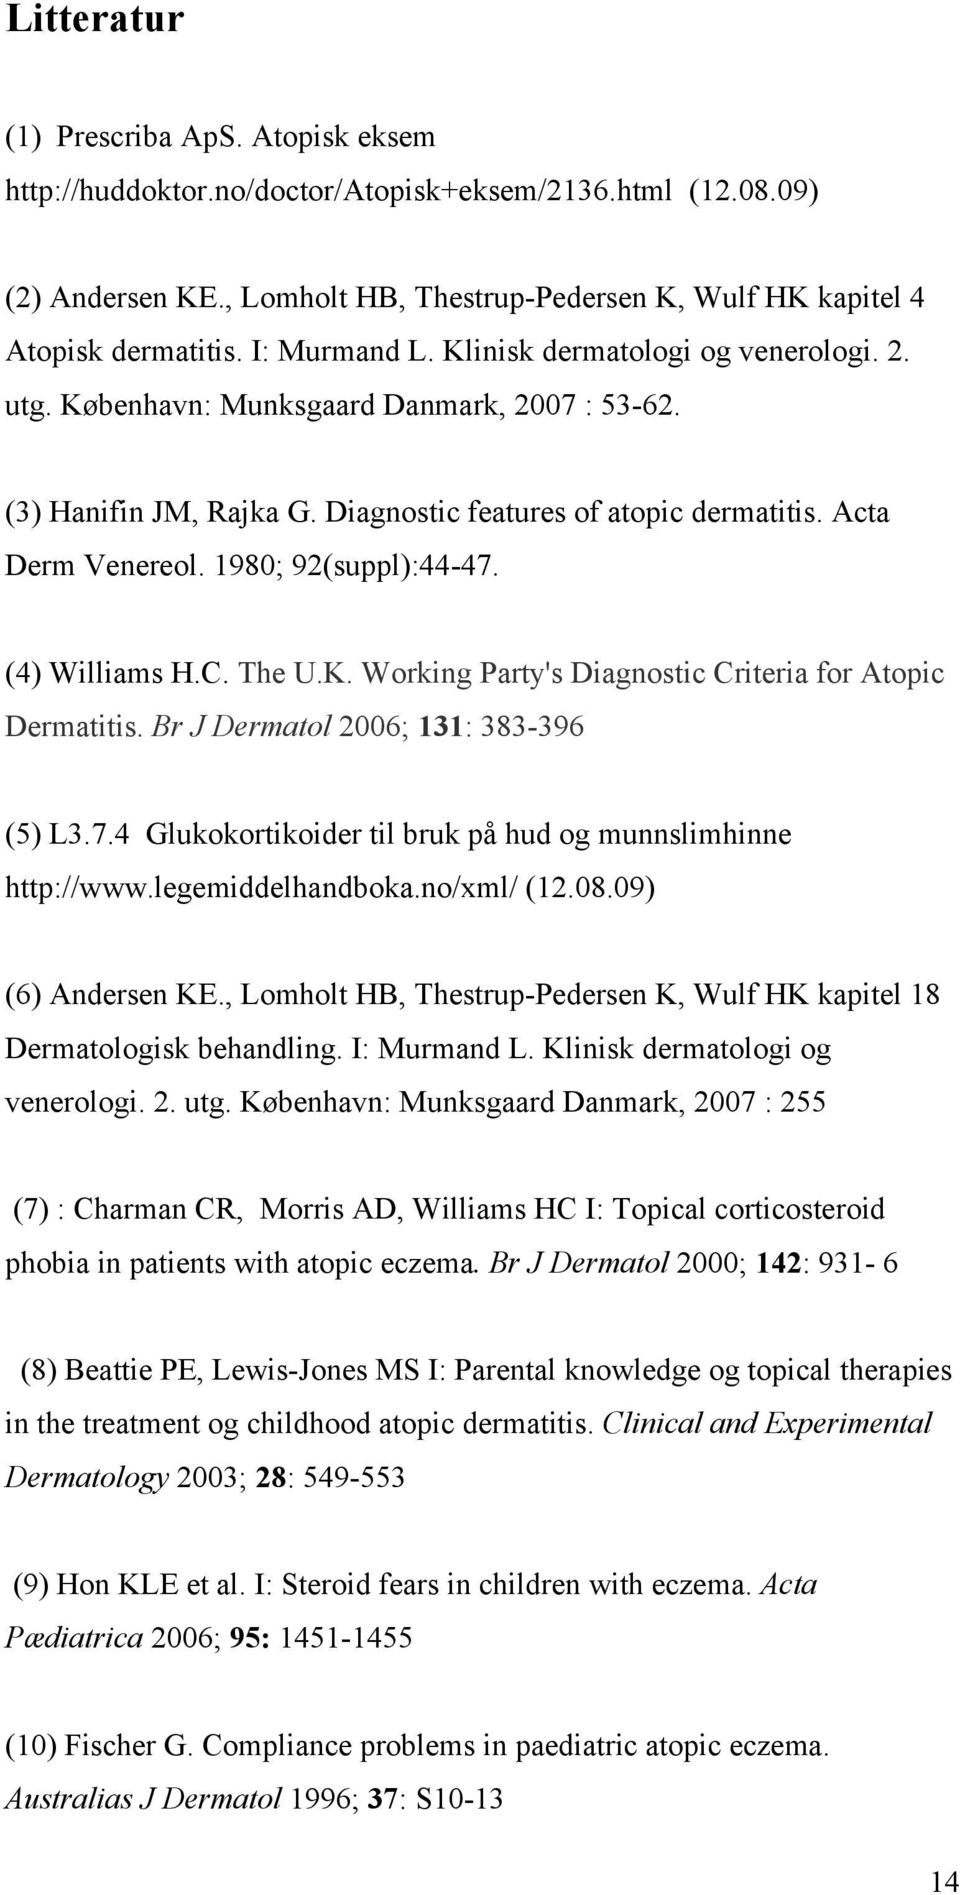 1980; 92(suppl):44-47. (4) Williams H.C. The U.K. Working Party's Diagnostic Criteria for Atopic Dermatitis. Br J Dermatol 2006; 131: 383-396 (5) L3.7.4 Glukokortikoider til bruk på hud og munnslimhinne http://www.